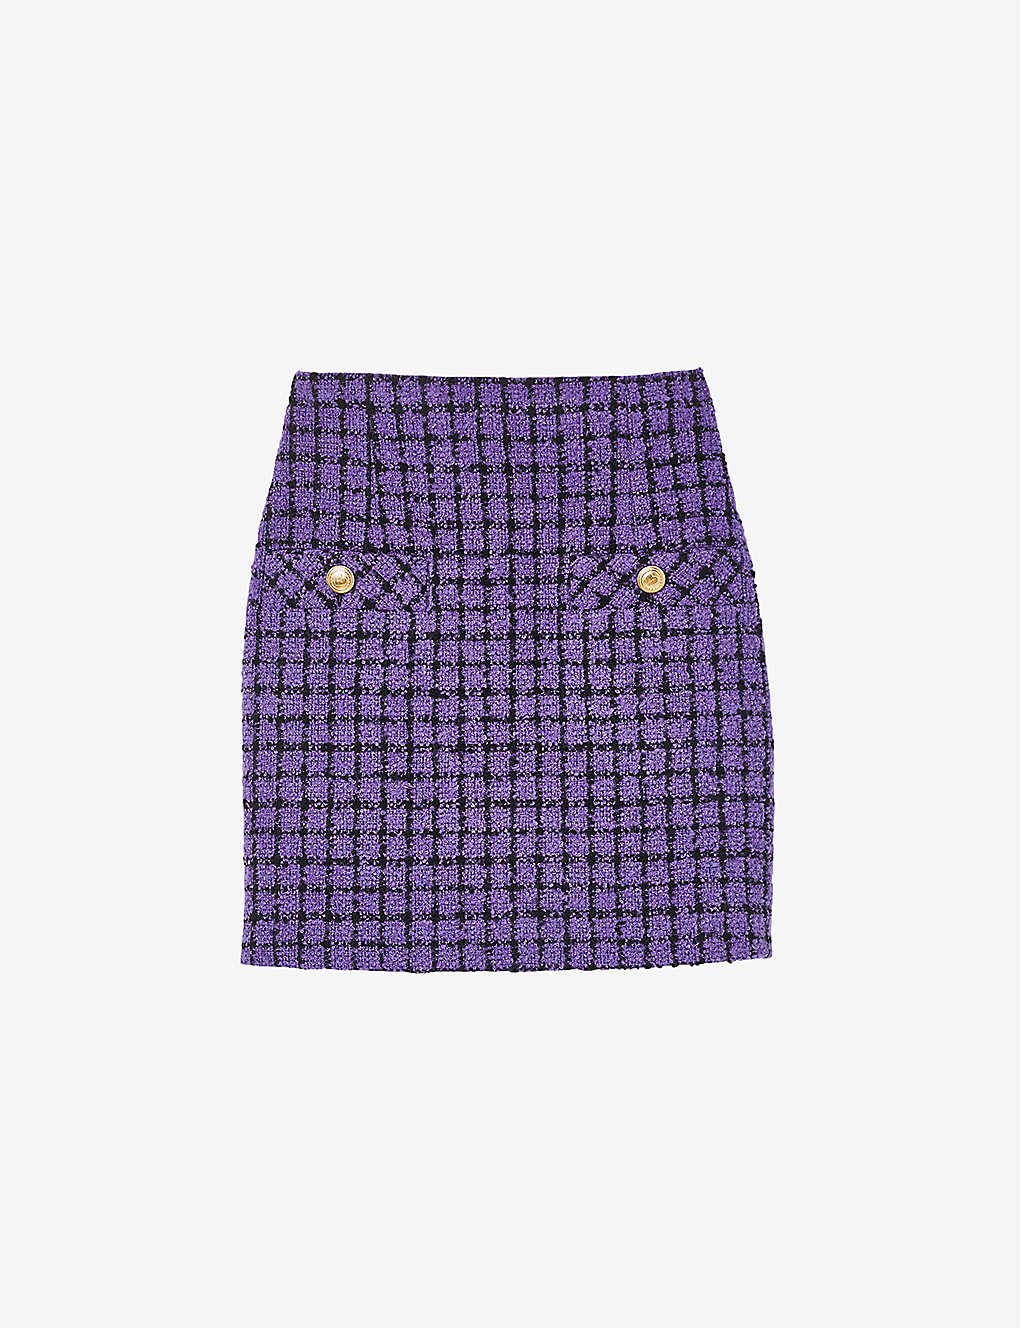 Selfridges & Co Women Clothing Skirts Printed Skirts Clarinette check-print tweed mini skirt 